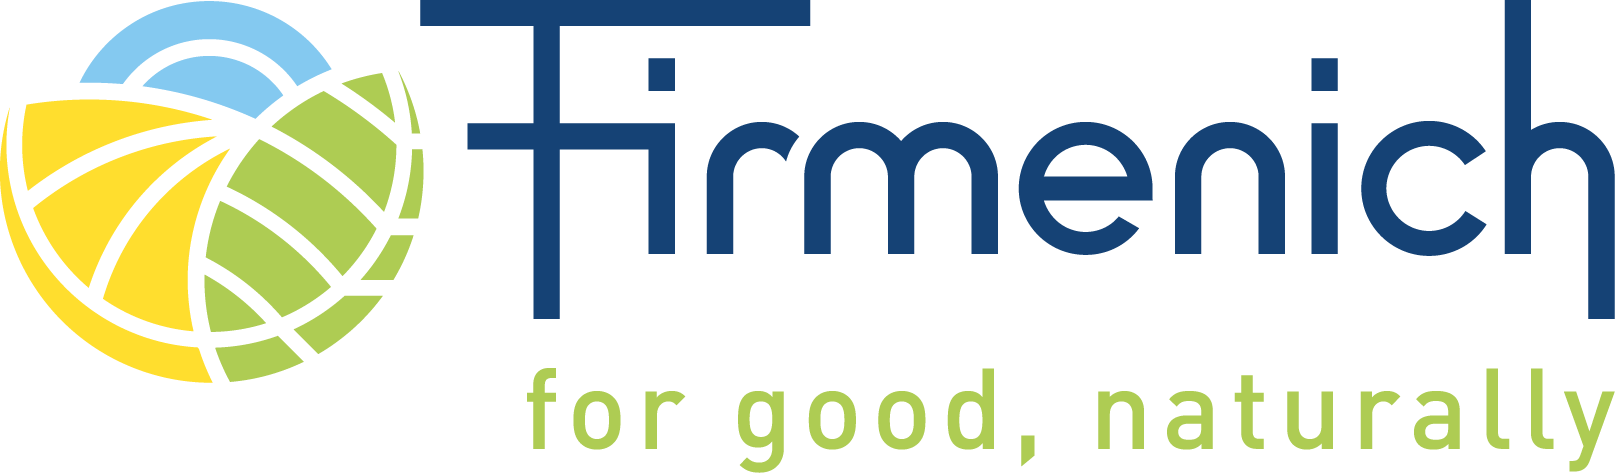 Firmenich logo 